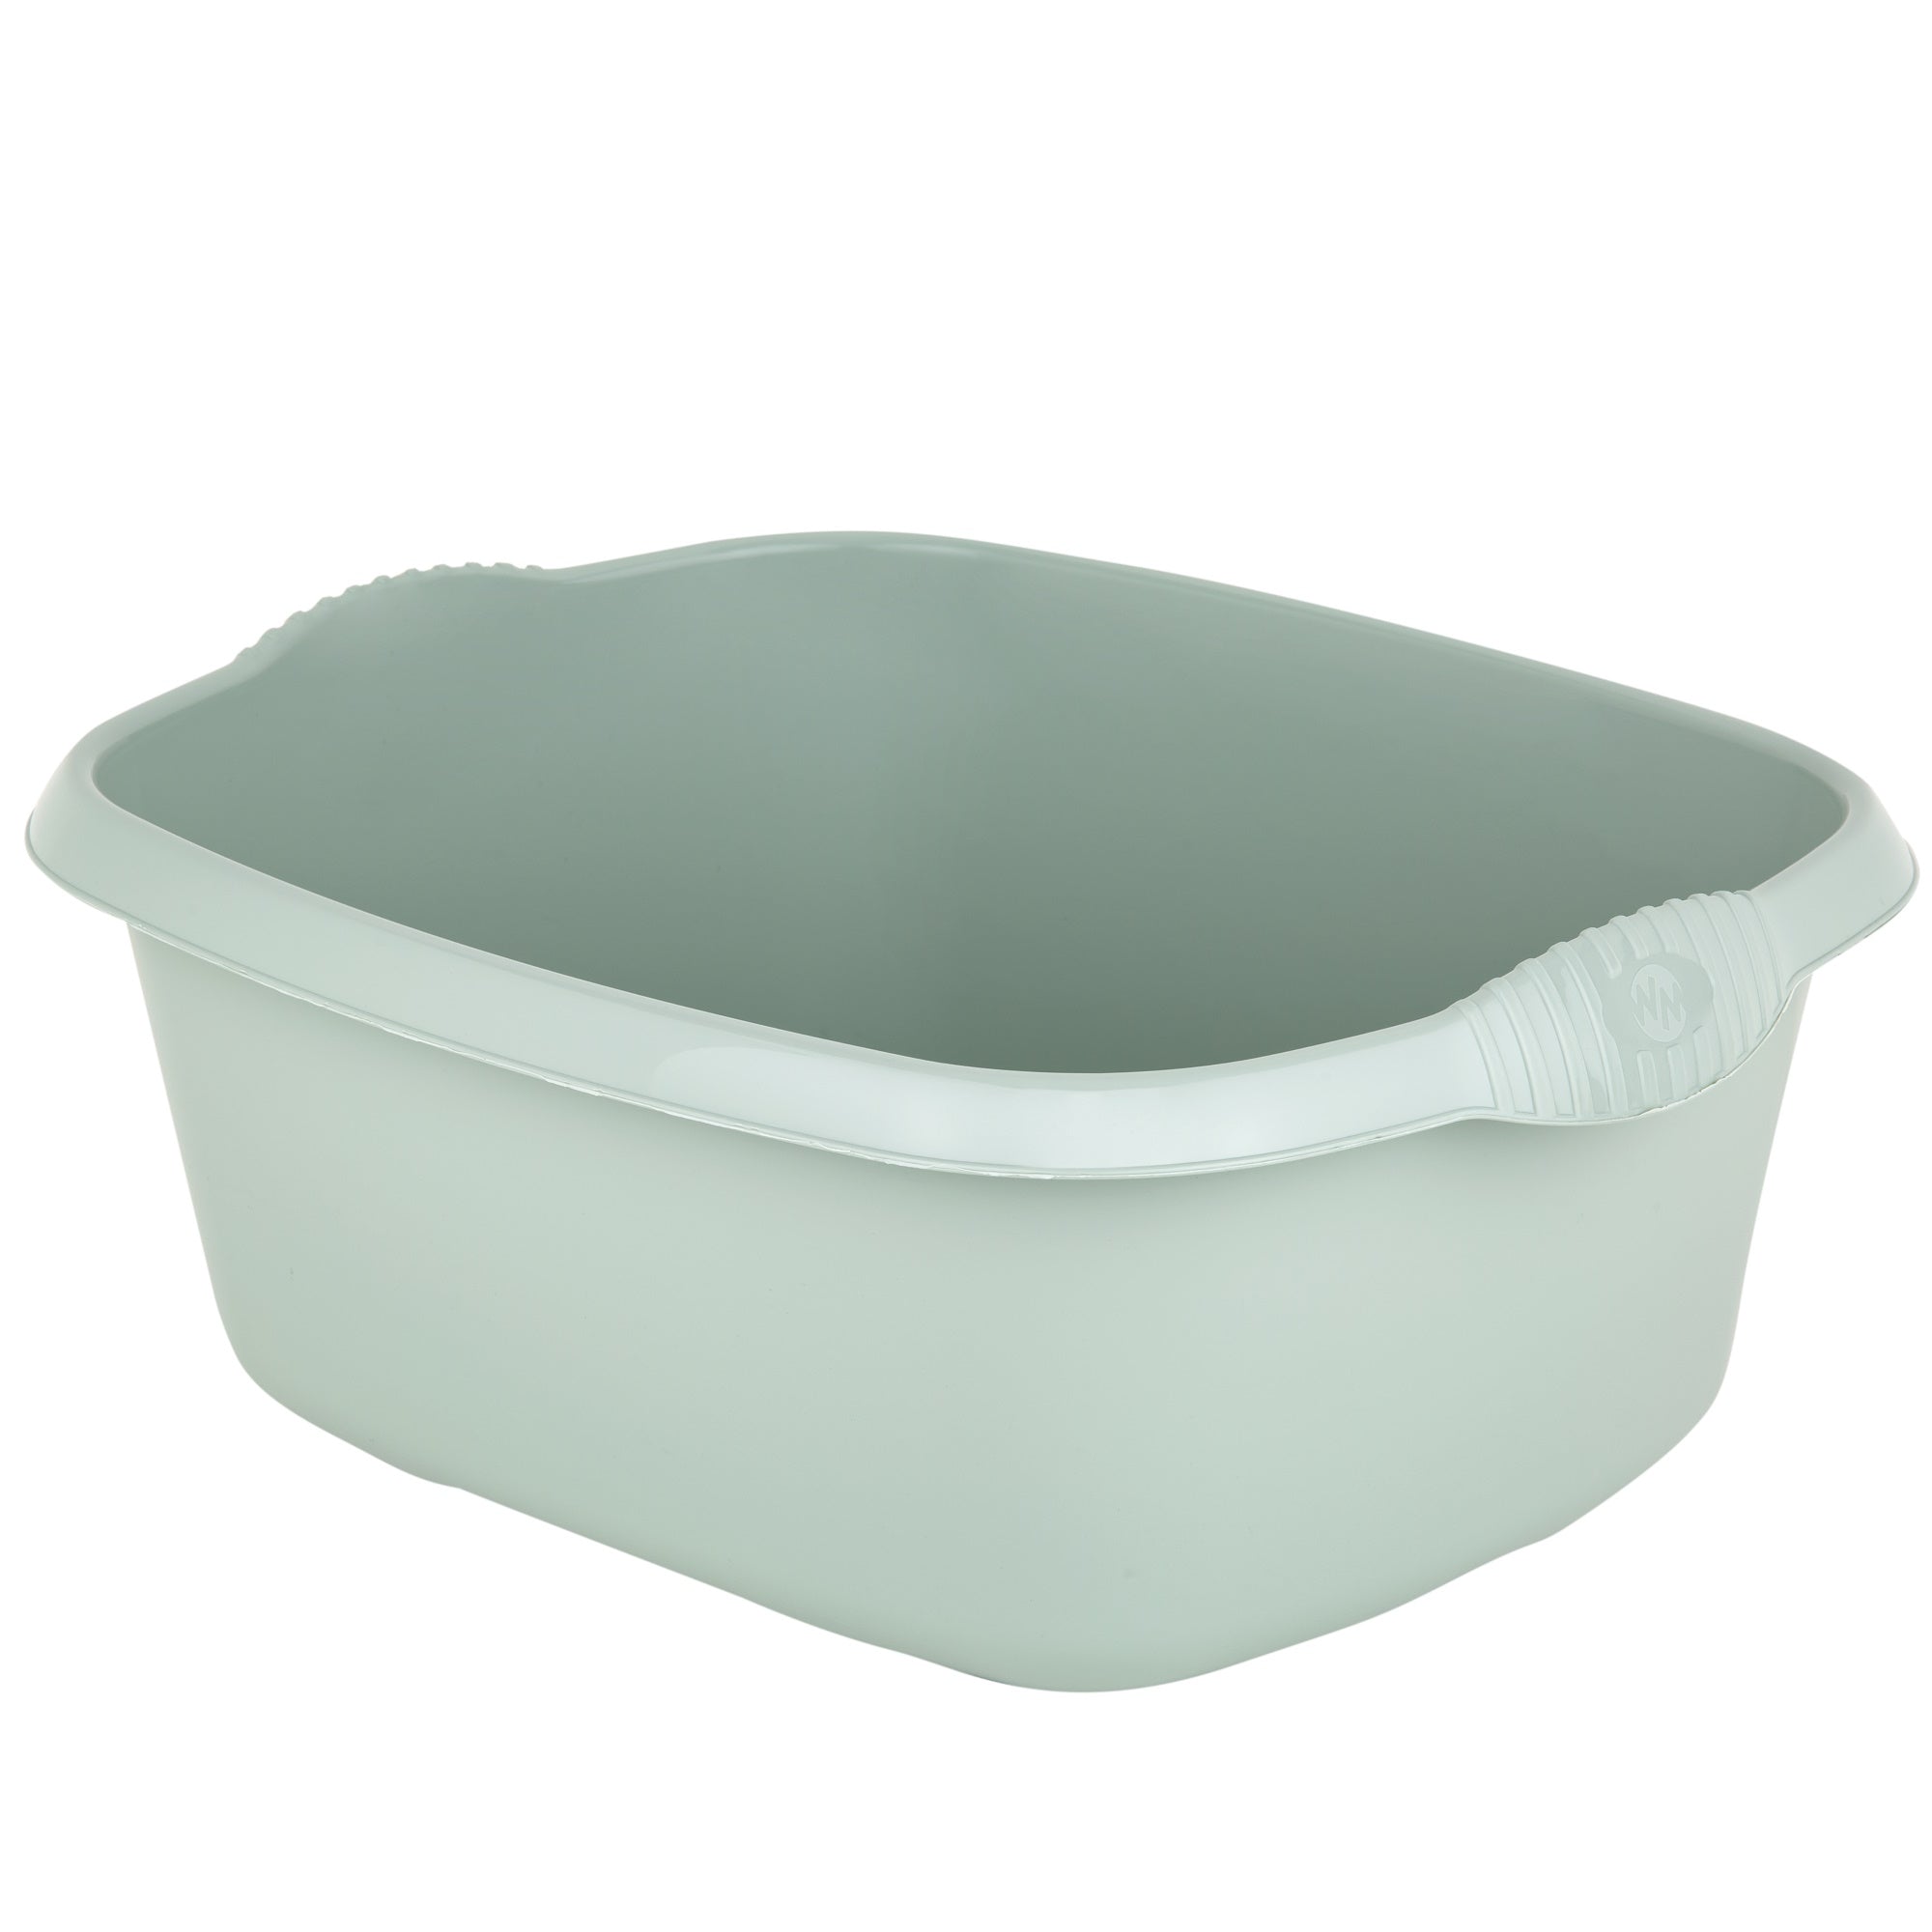 Wham 17230 Casa Plastic Rectangular Washing Up Bowl 39cm - Silver Sage - Premium Washing Up Bowls from What More UK Ltd - Just $2.80! Shop now at W Hurst & Son (IW) Ltd